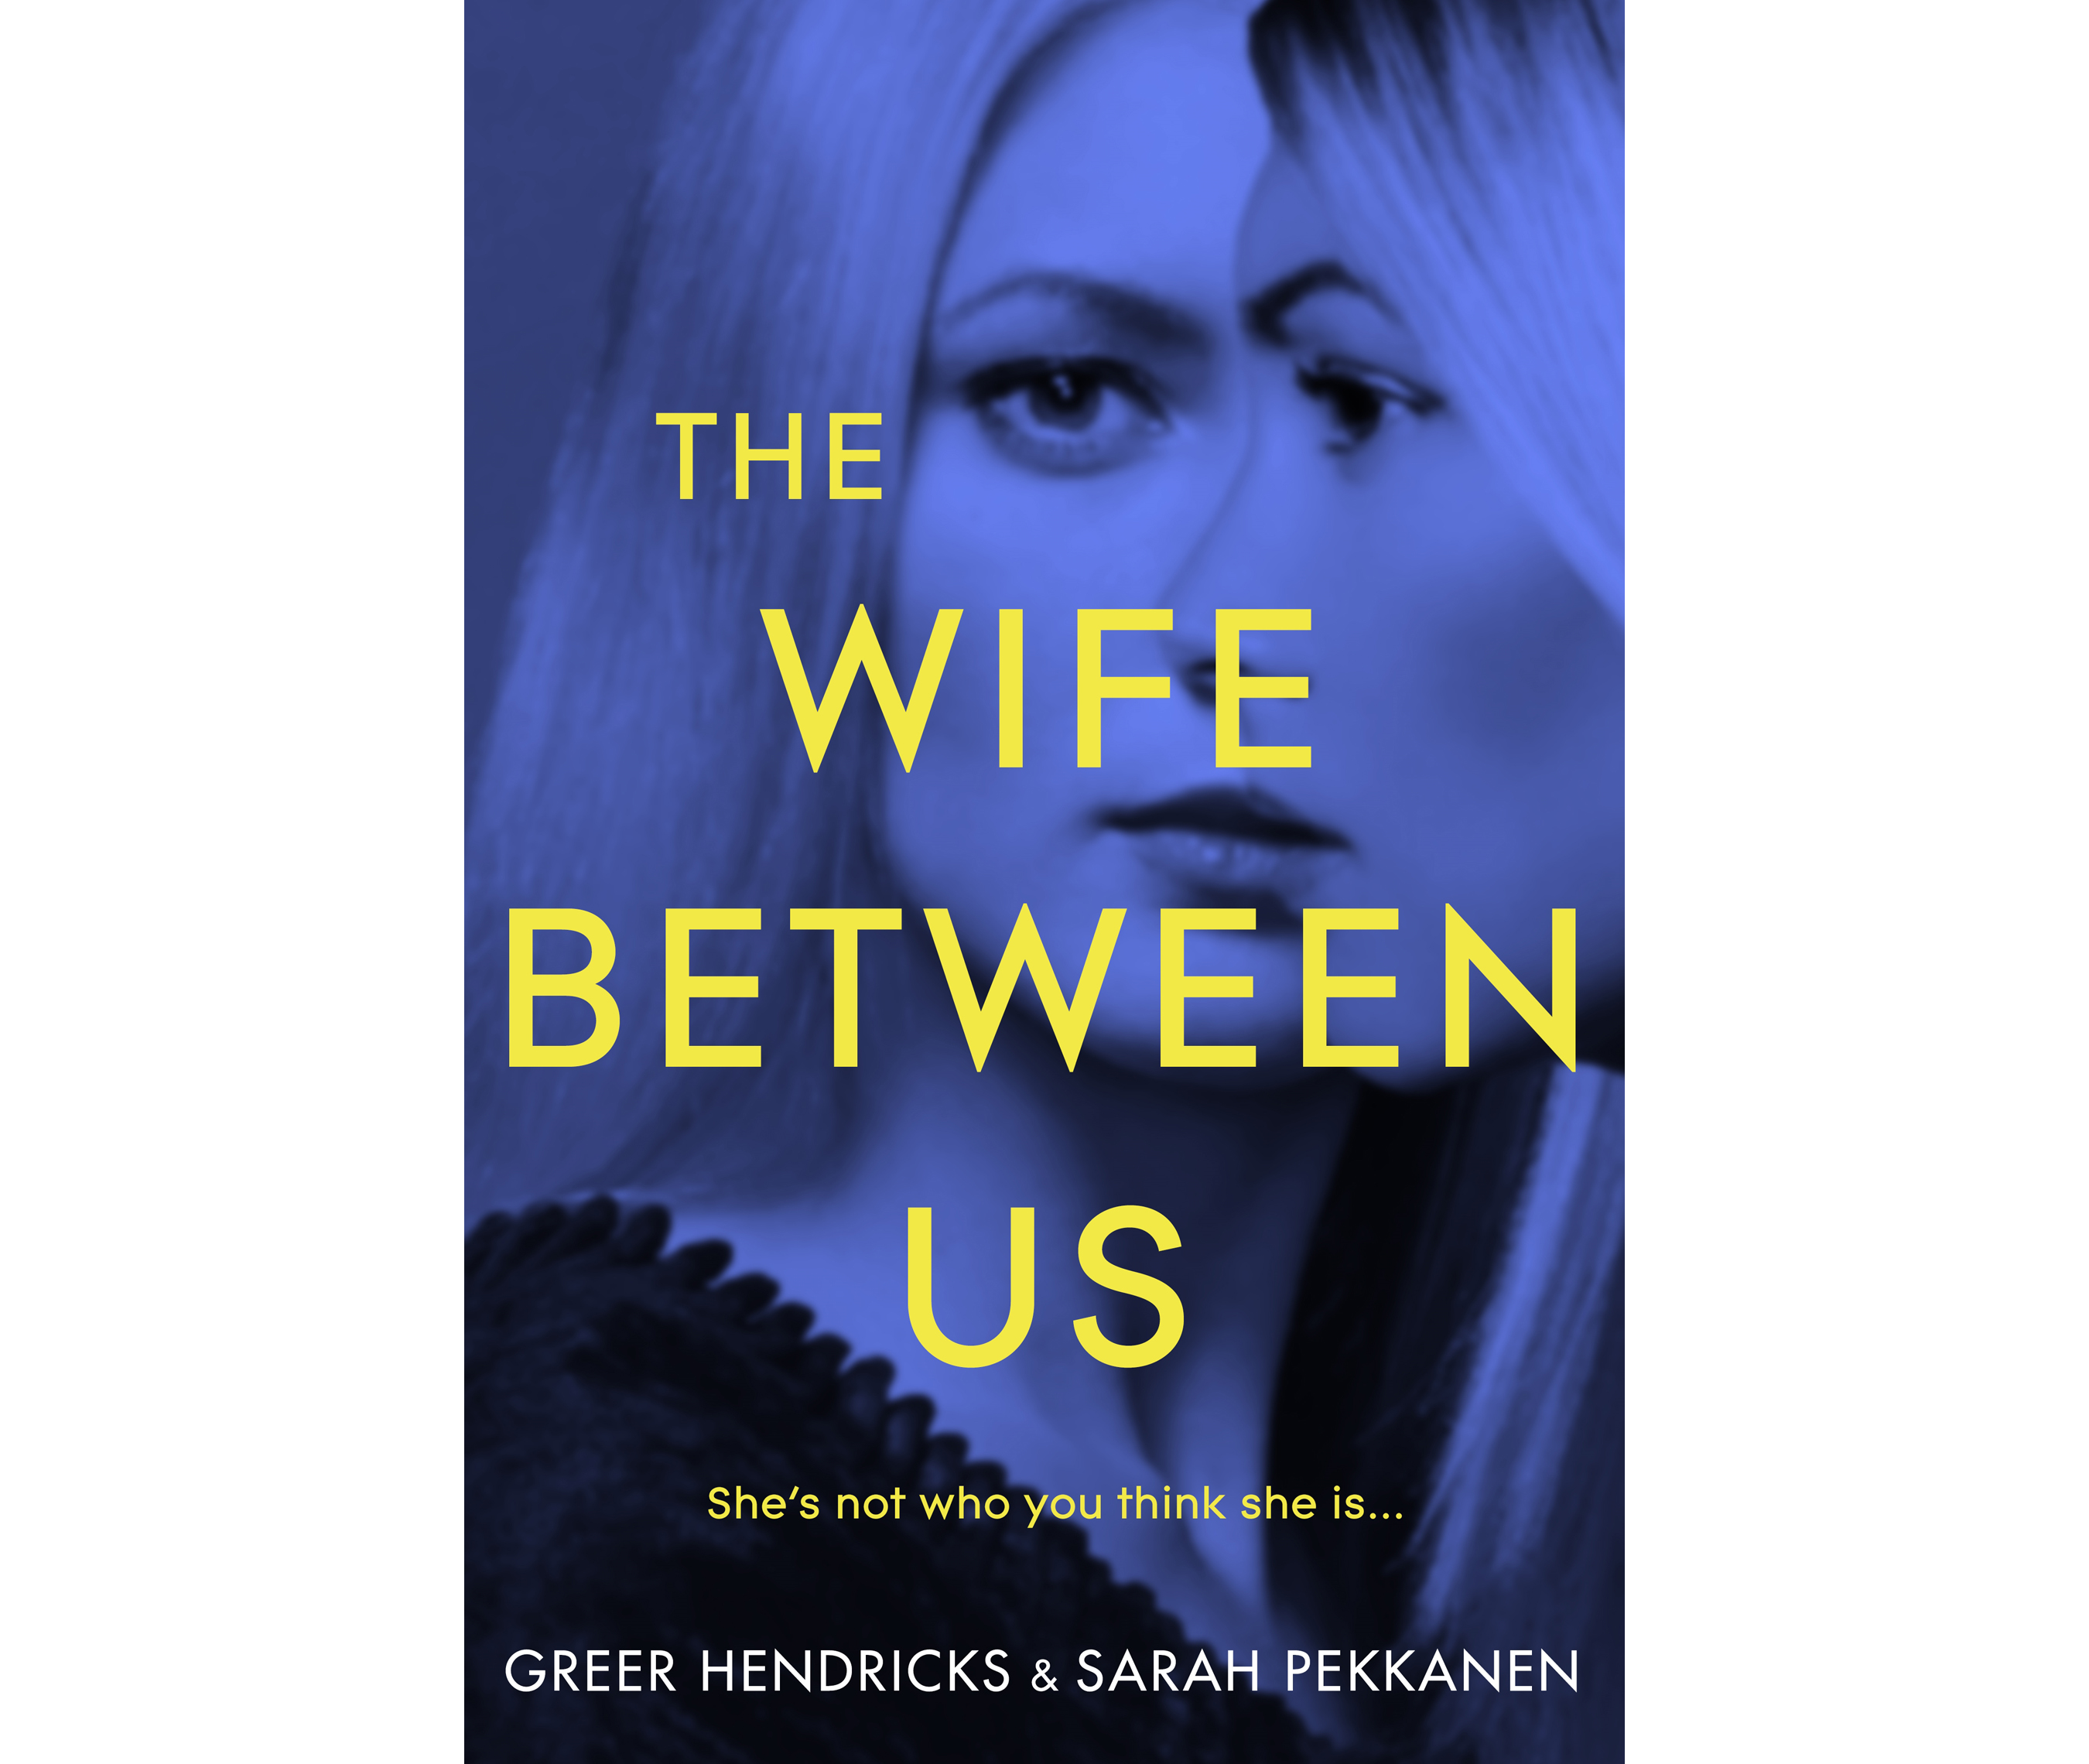  The Wife Between Us by Greer Hendricks and Sarah Pekkanen (Macmillan/PA)